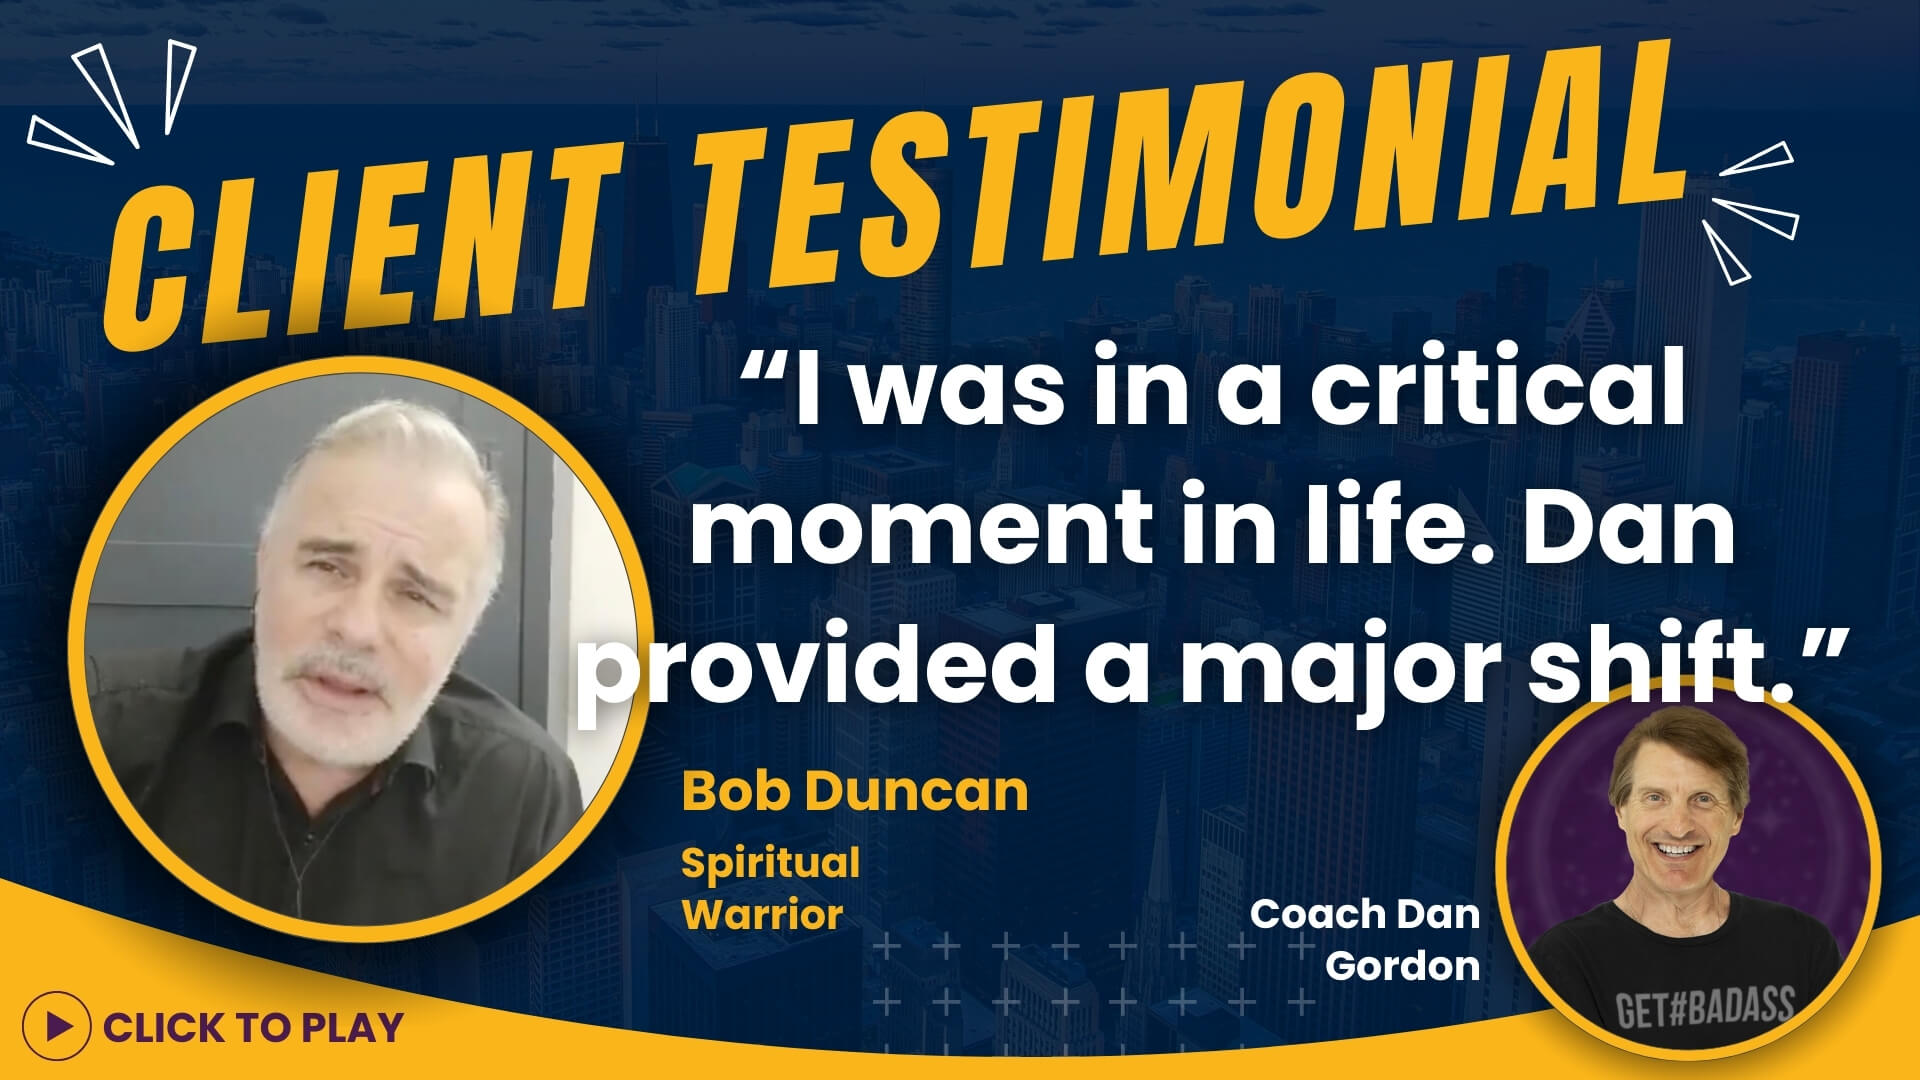 Bob Duncan, described as a Spiritual Warrior, gives a moving testimonial on Coach Dan Gordon's impact during a pivotal life moment, with an interactive 'Click to Play' video feature.